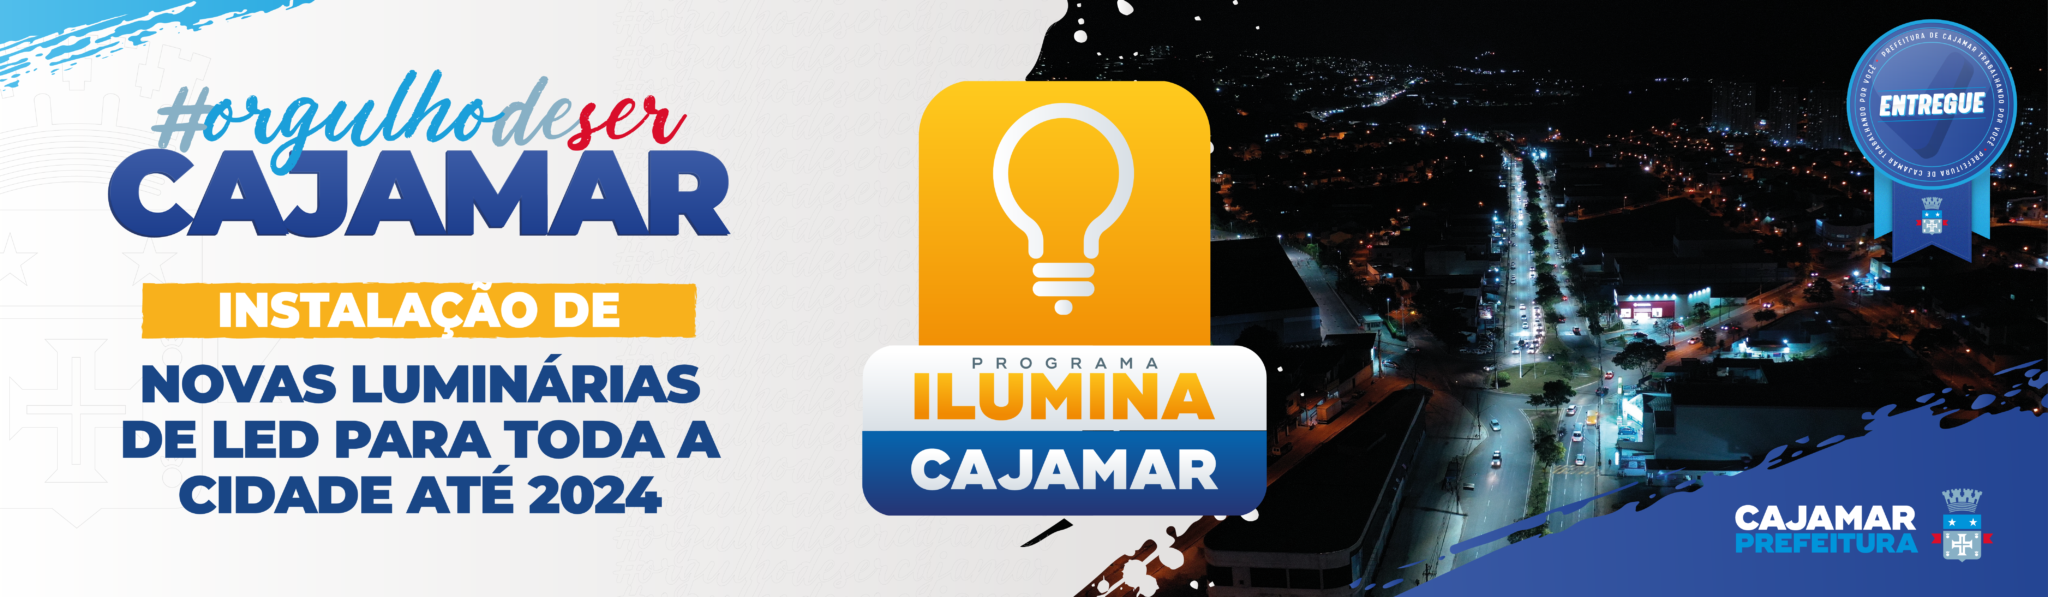 Ilumina Cajamar